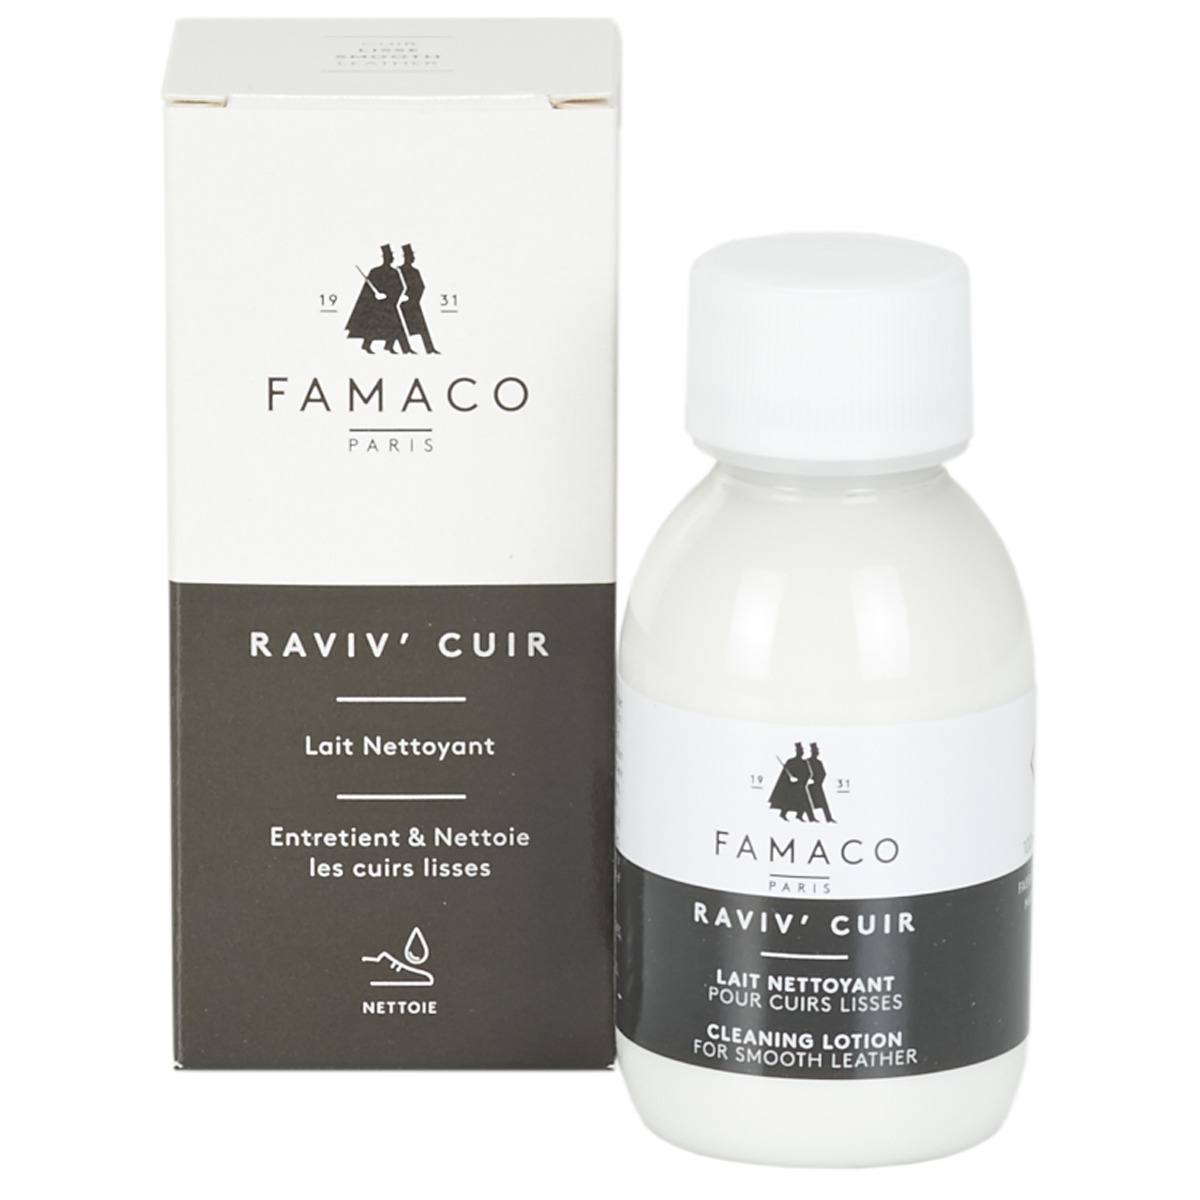 Famaco Raviv Cuir reinigingslotion - One size